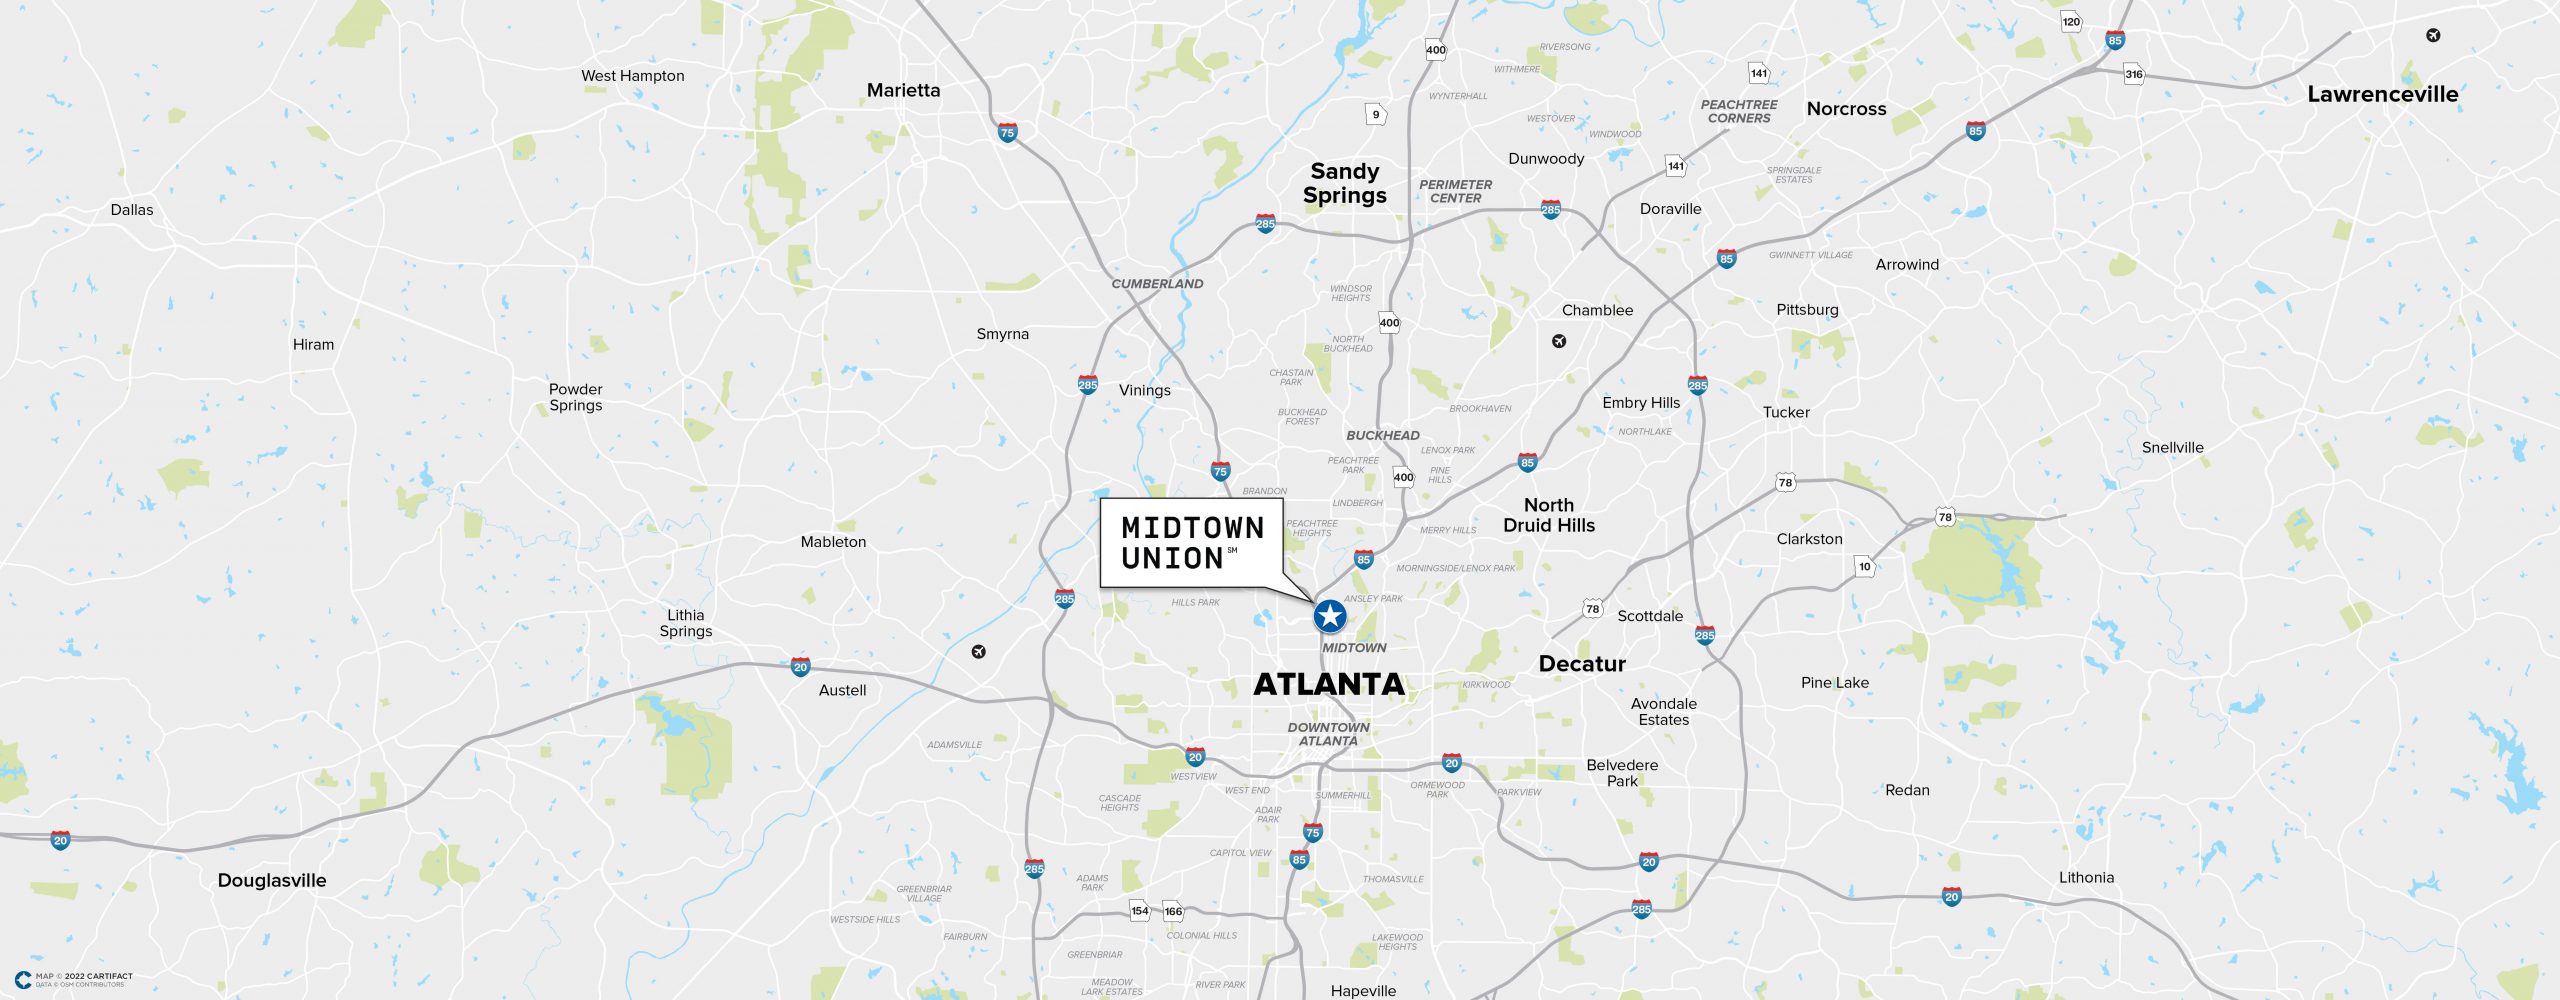 Midtown Union location map